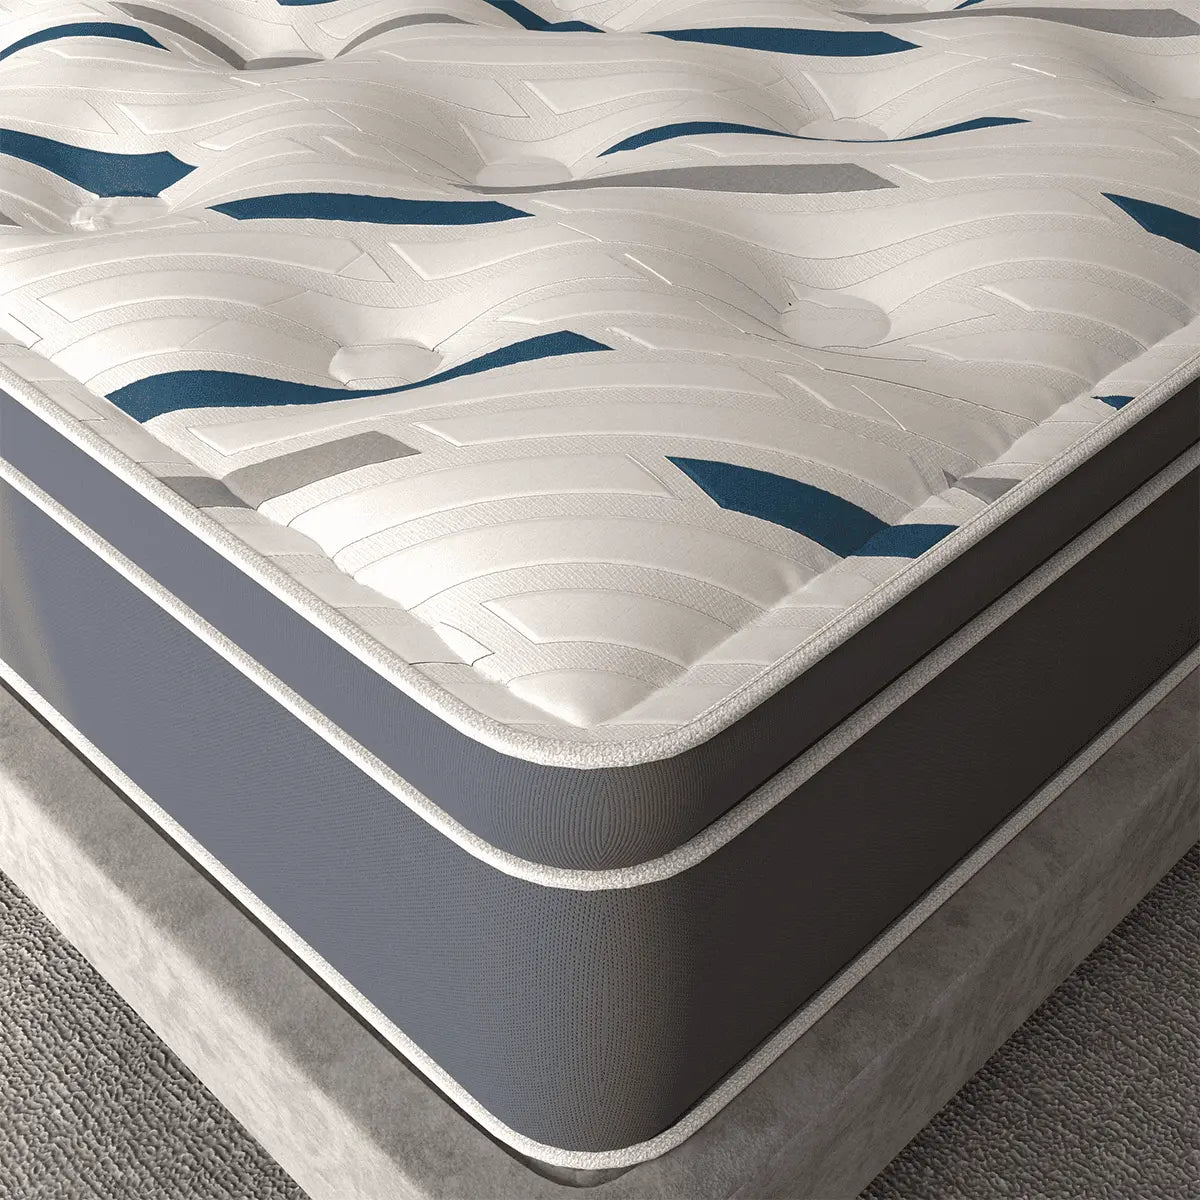 bodiform gel euro top mattress by englander - close view